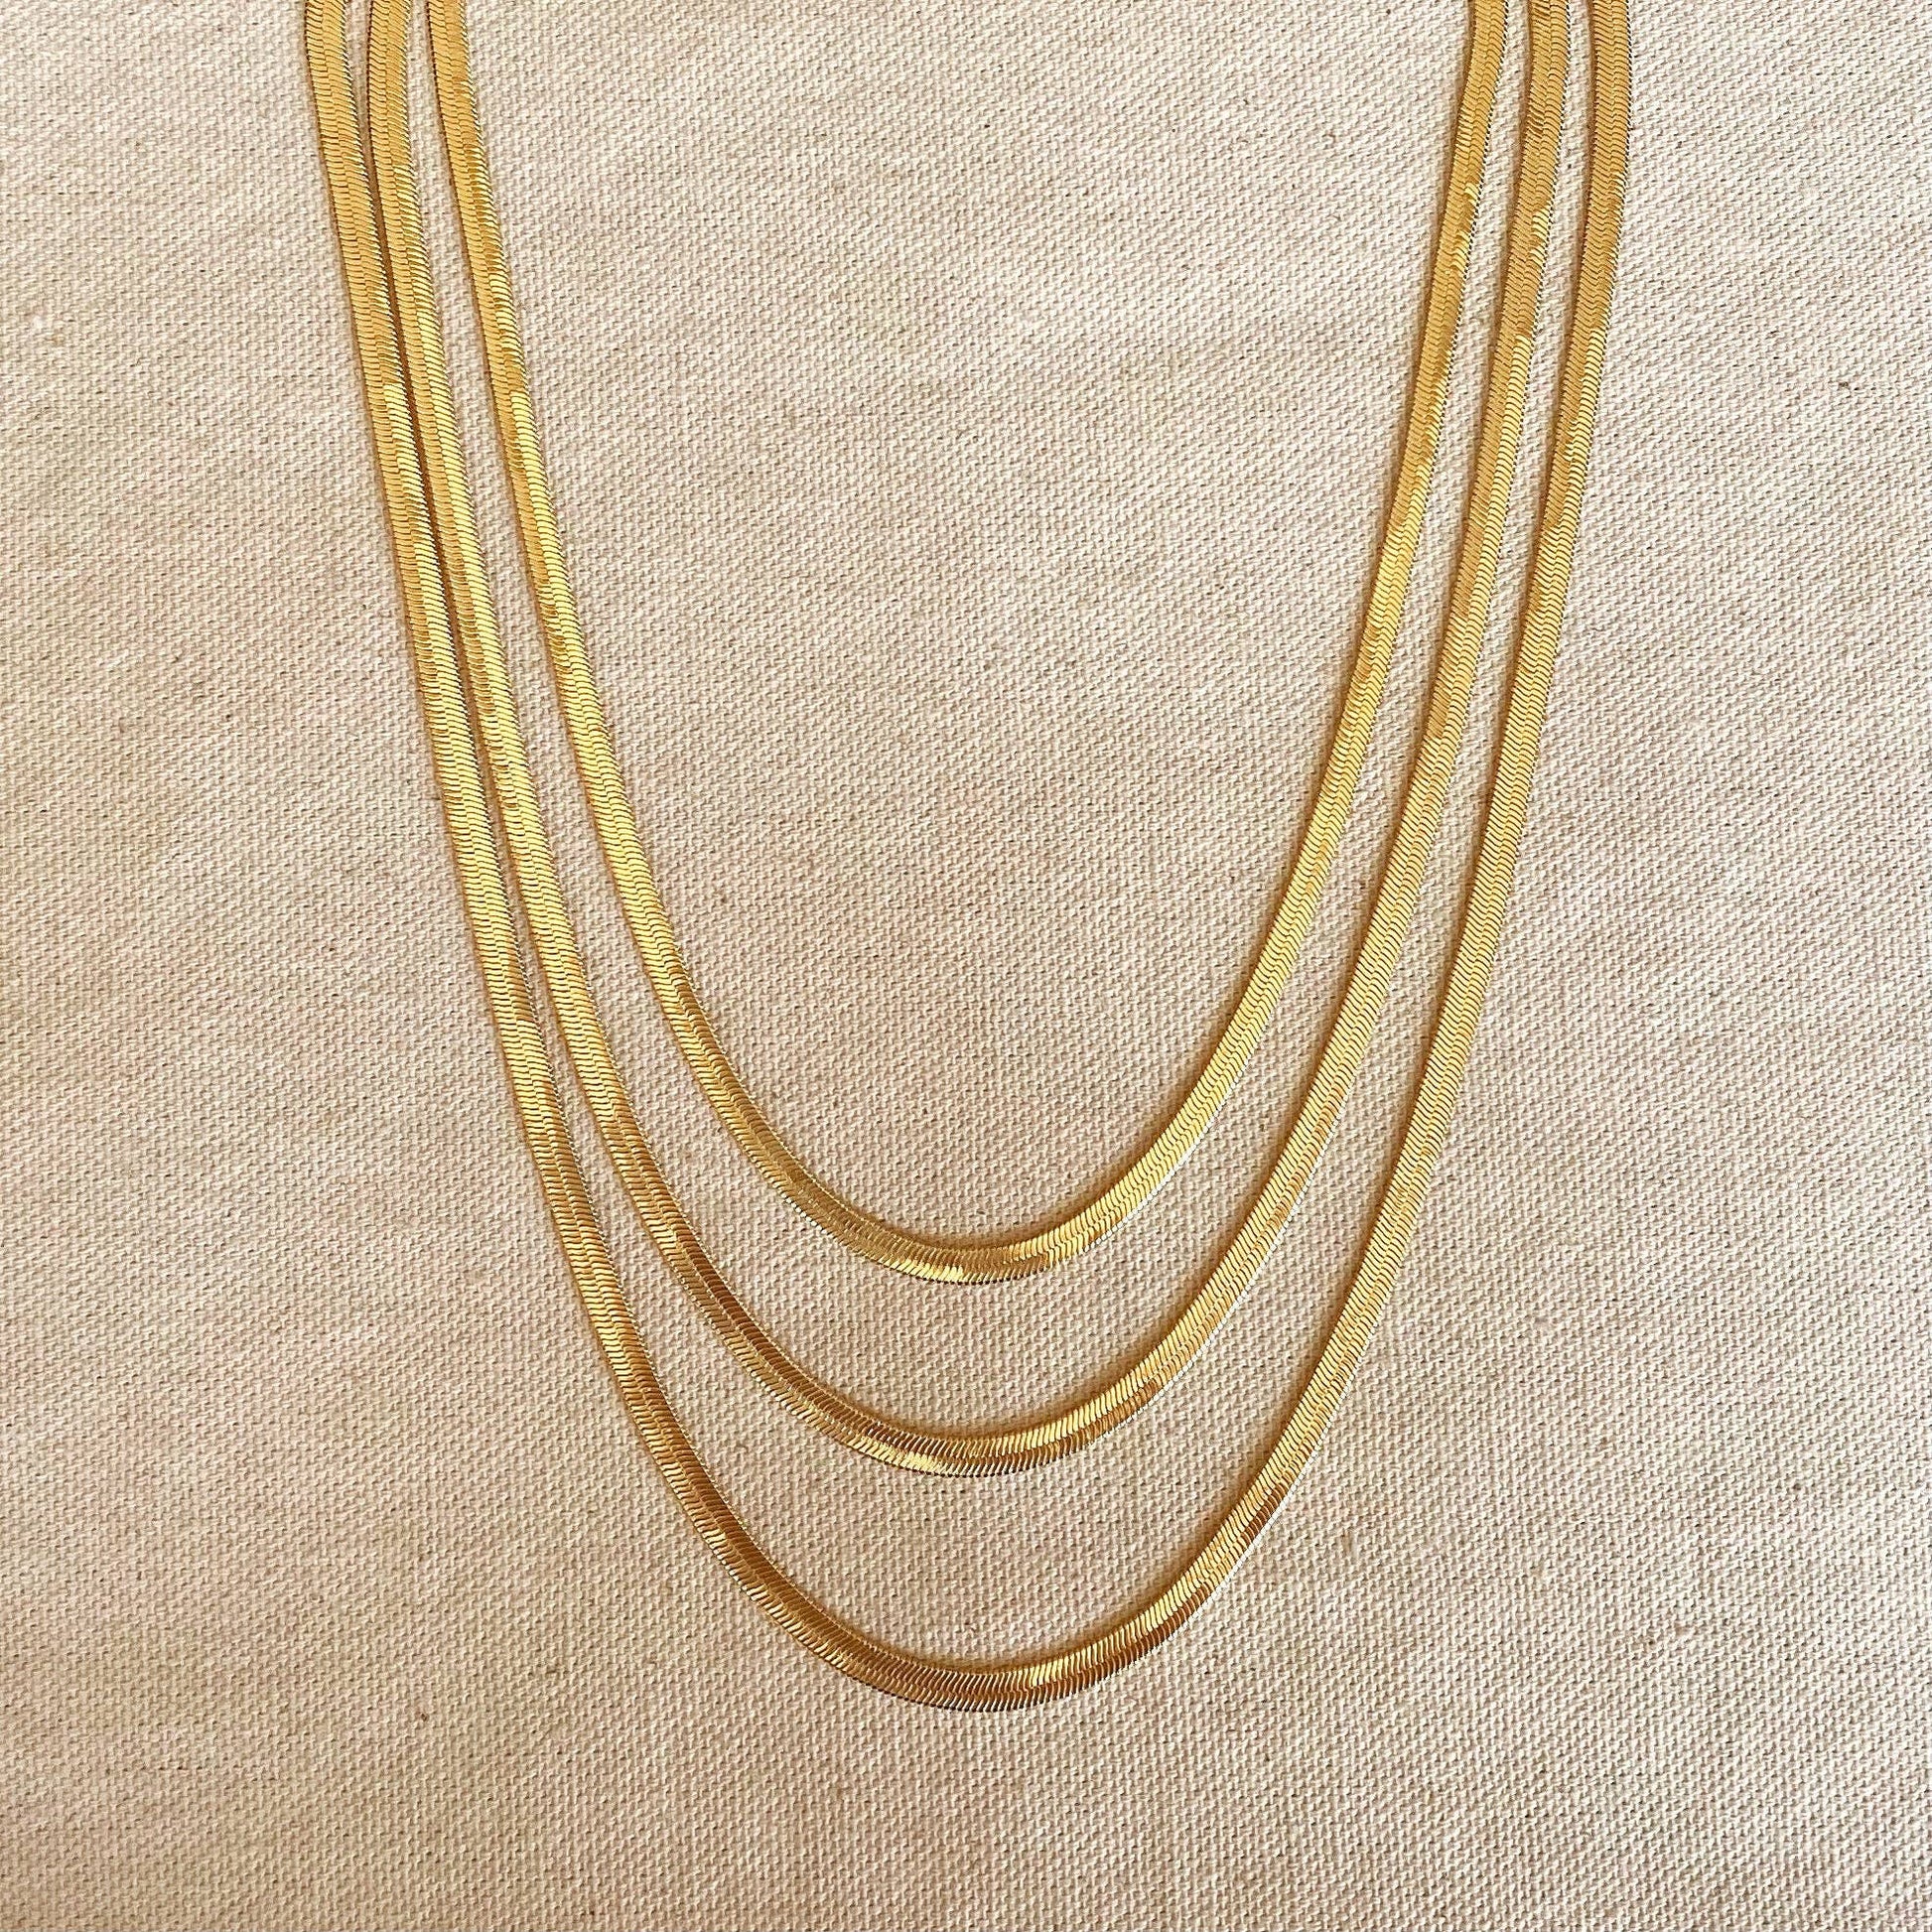 Herringbone chain 4mm width hypoallergenic anti-tarnish 18 karat gold filled lobster clasp